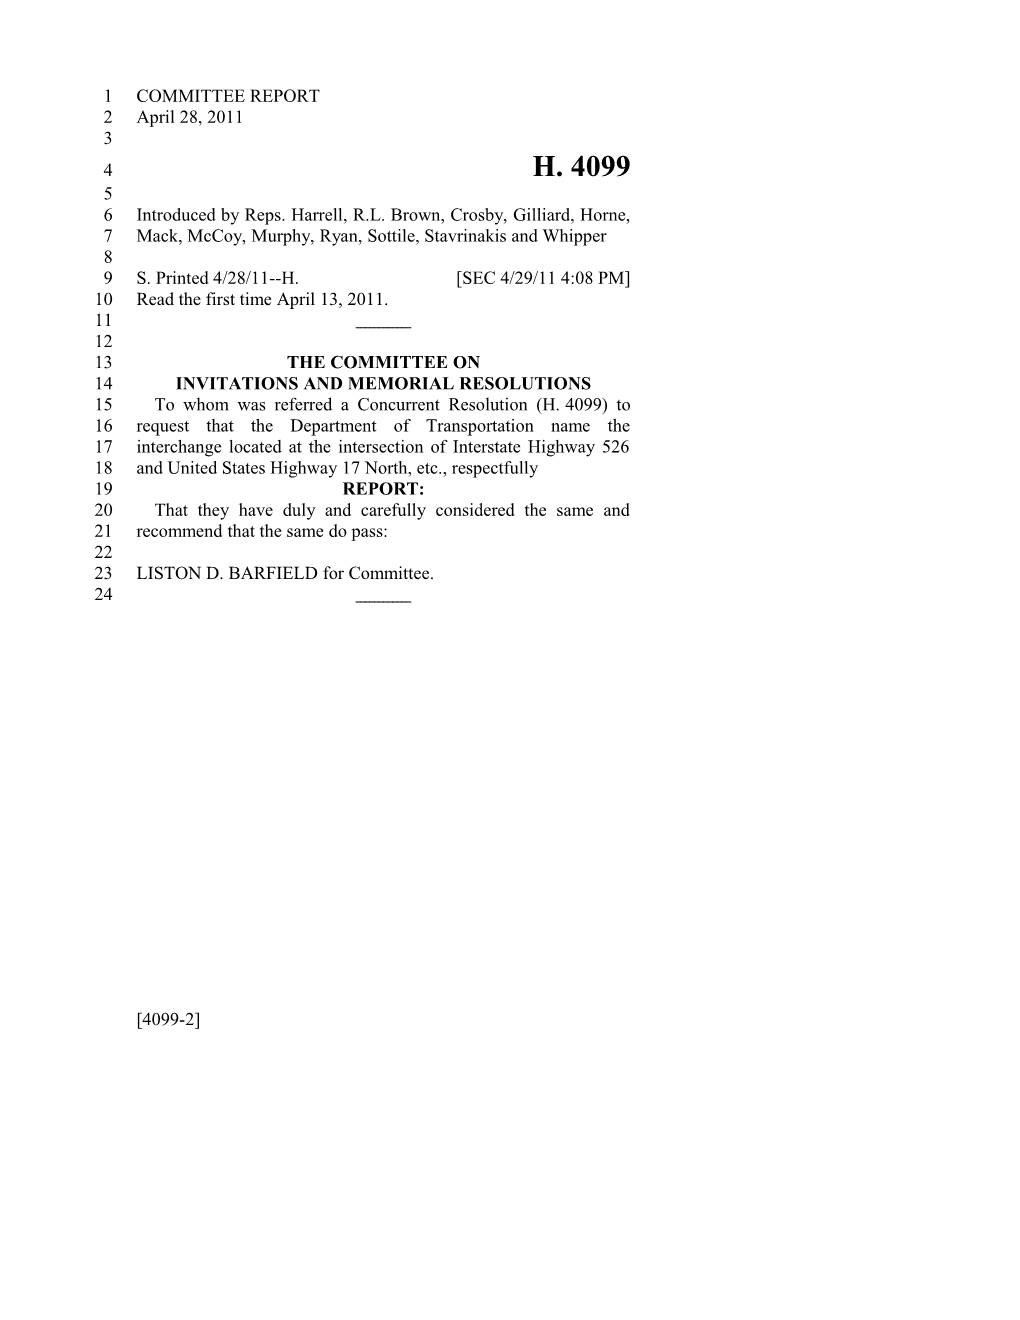 2011-2012 Bill 4099: Representative H. B. Chip Limehouse III Interchange - South Carolina